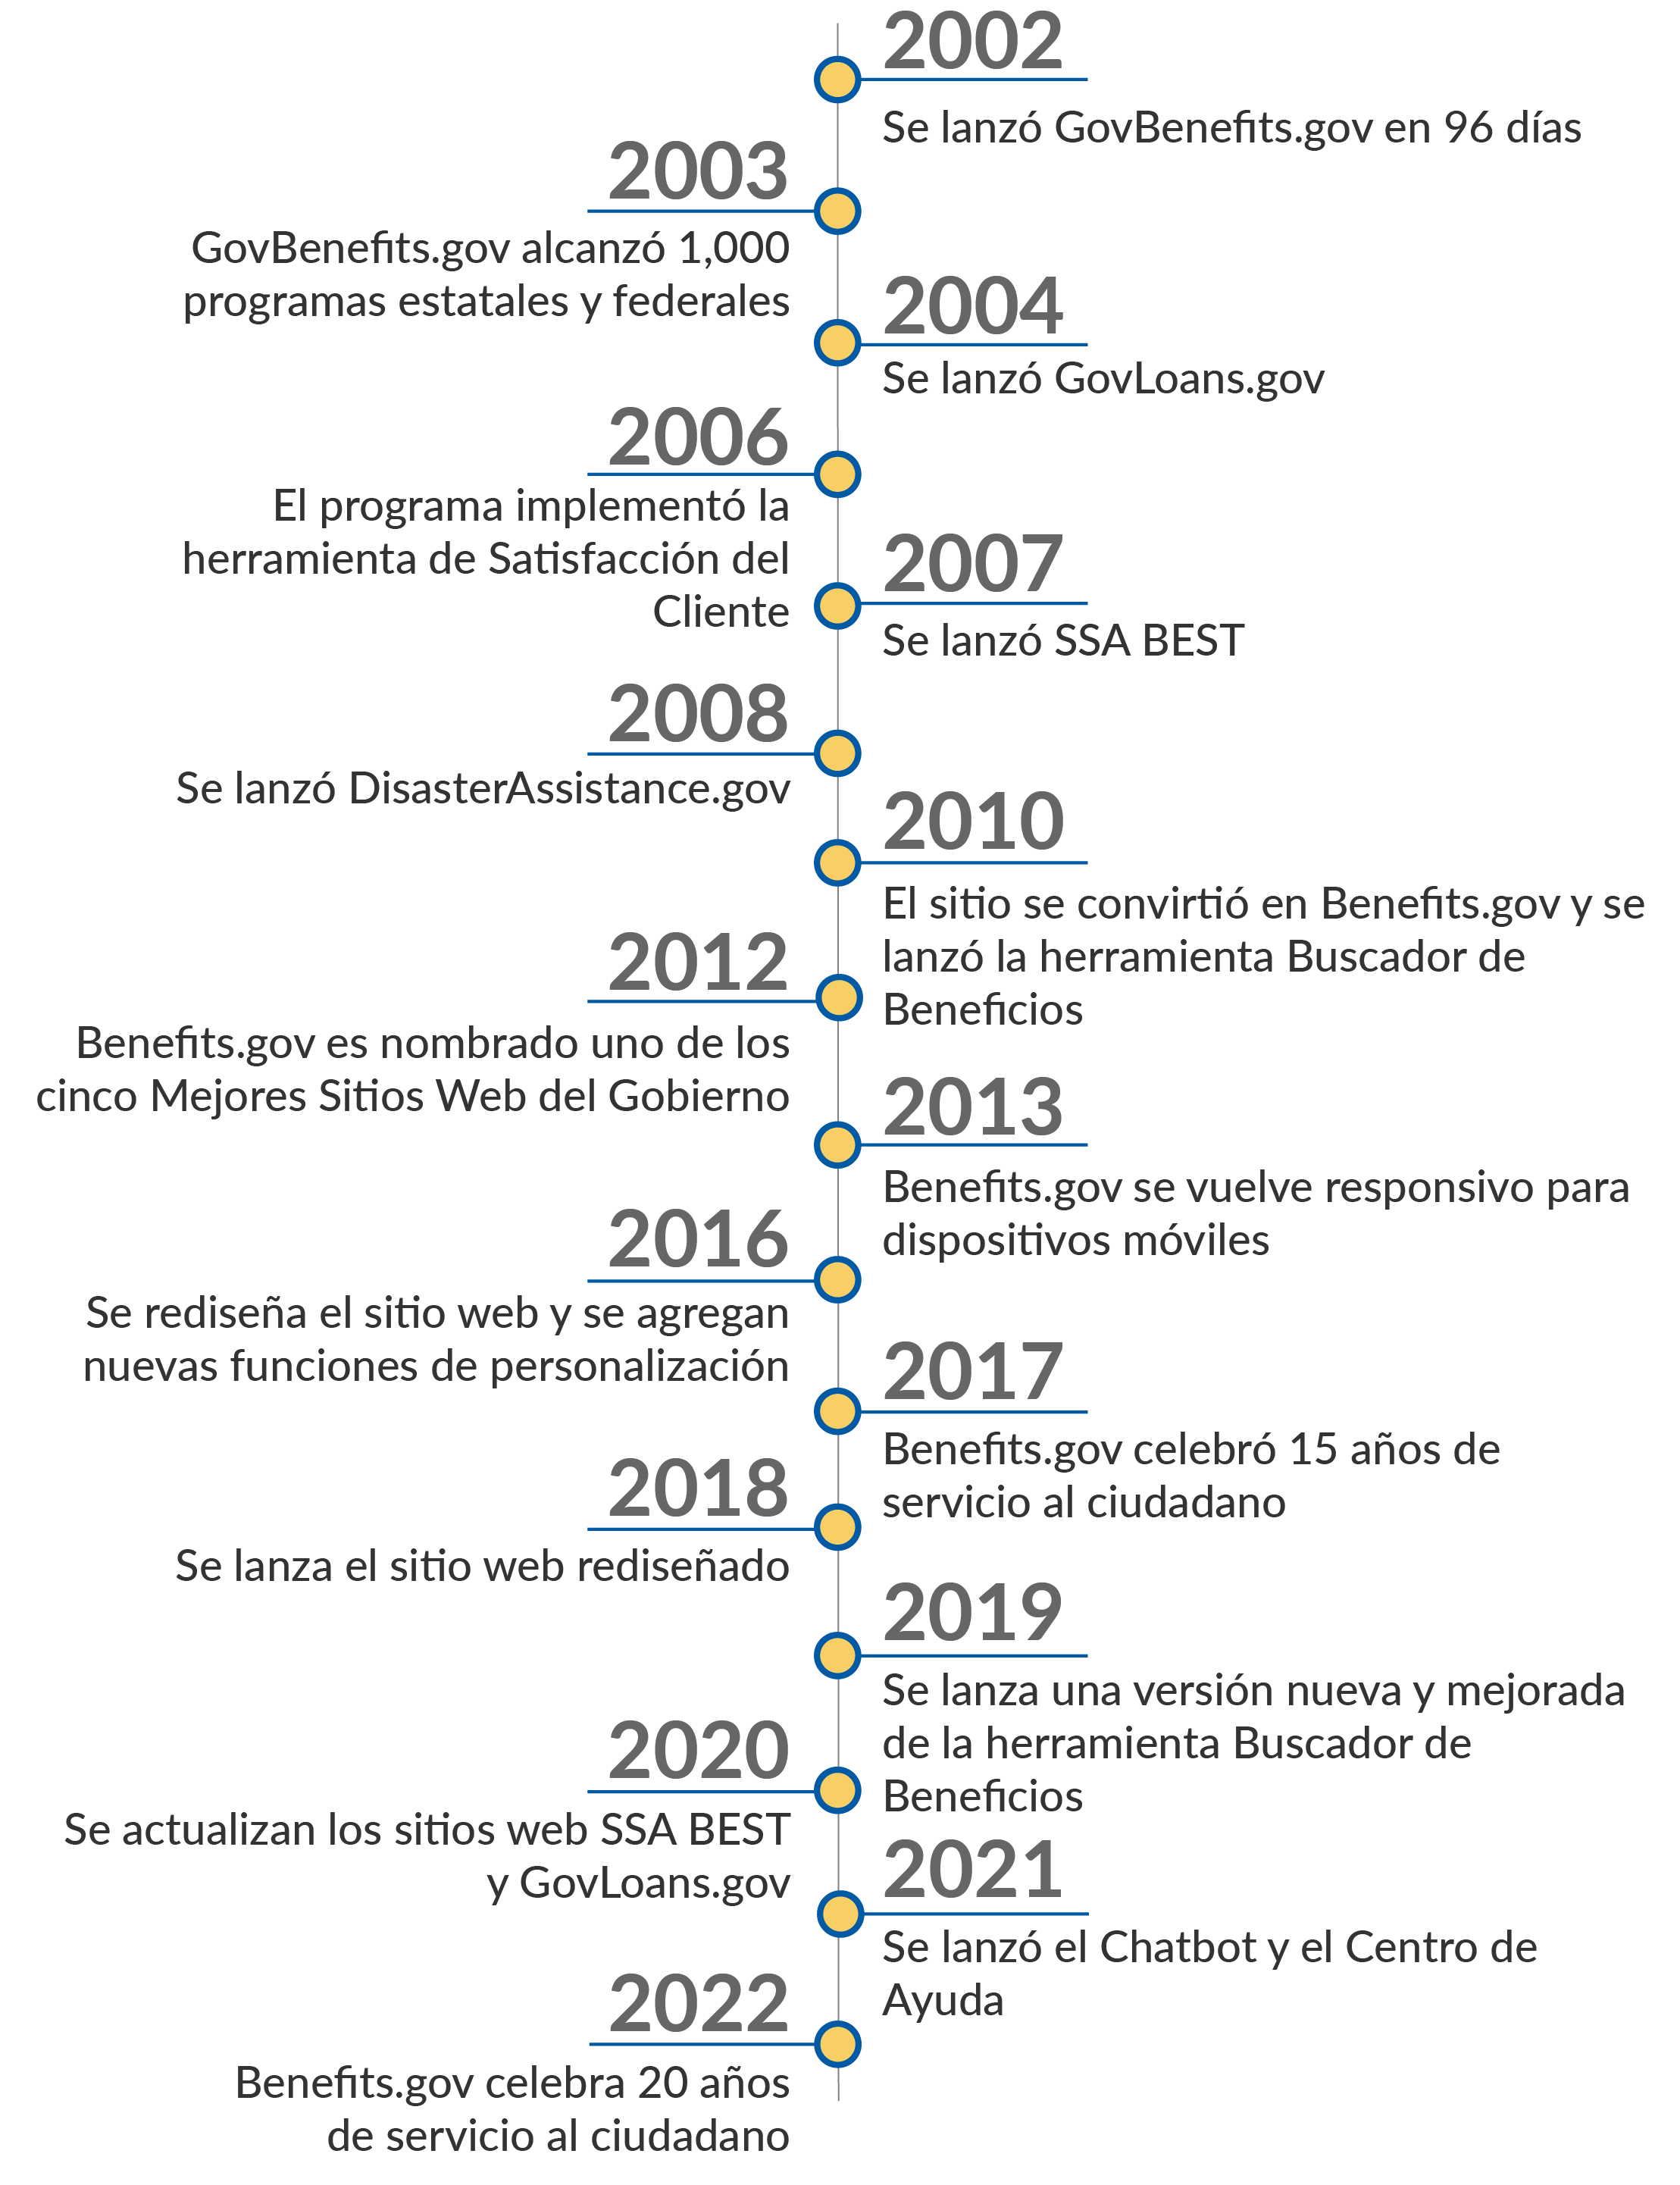 BG Timeline 2022 